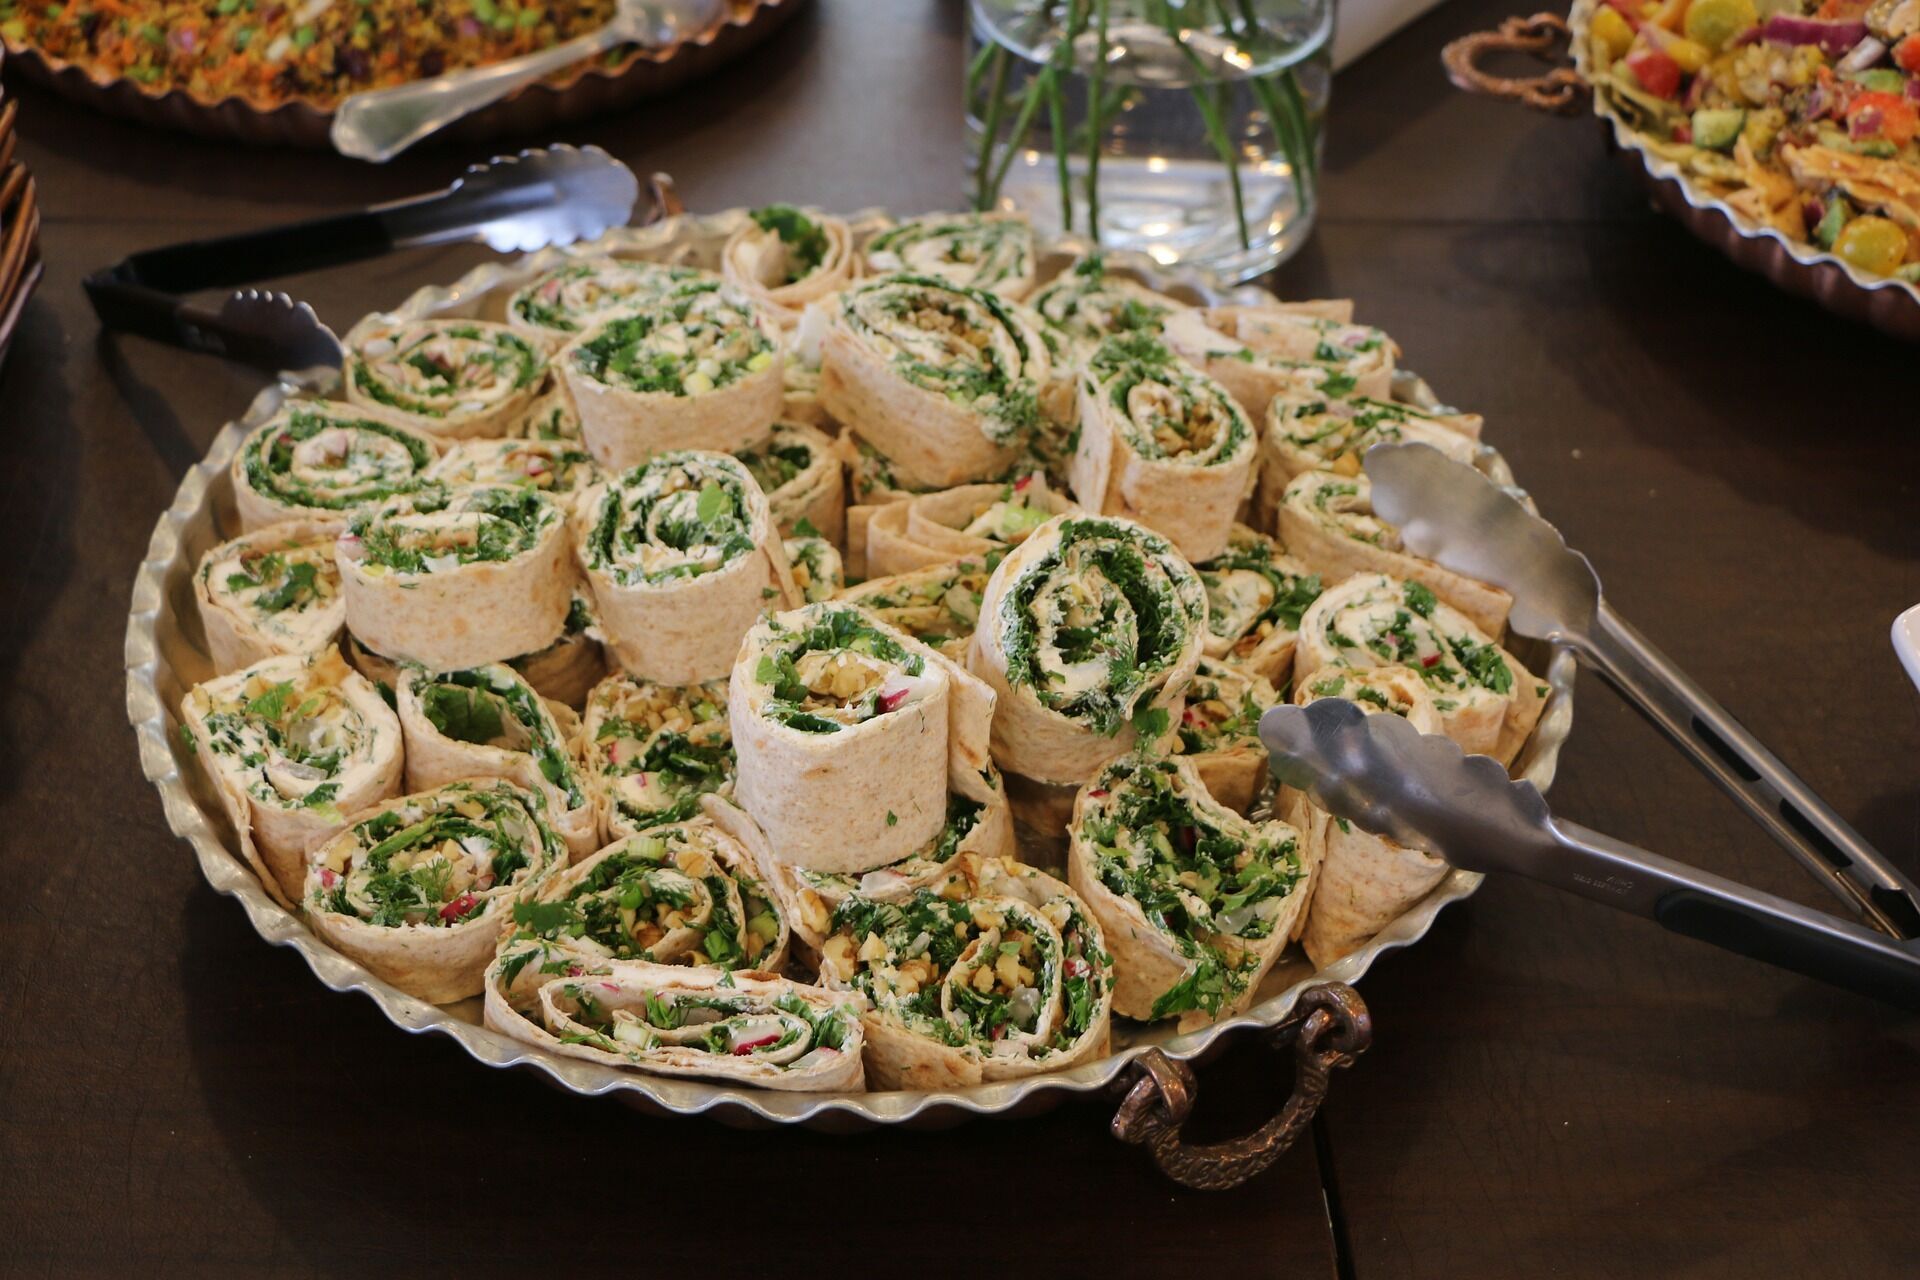 Pita bread rolls with tuna and herbs